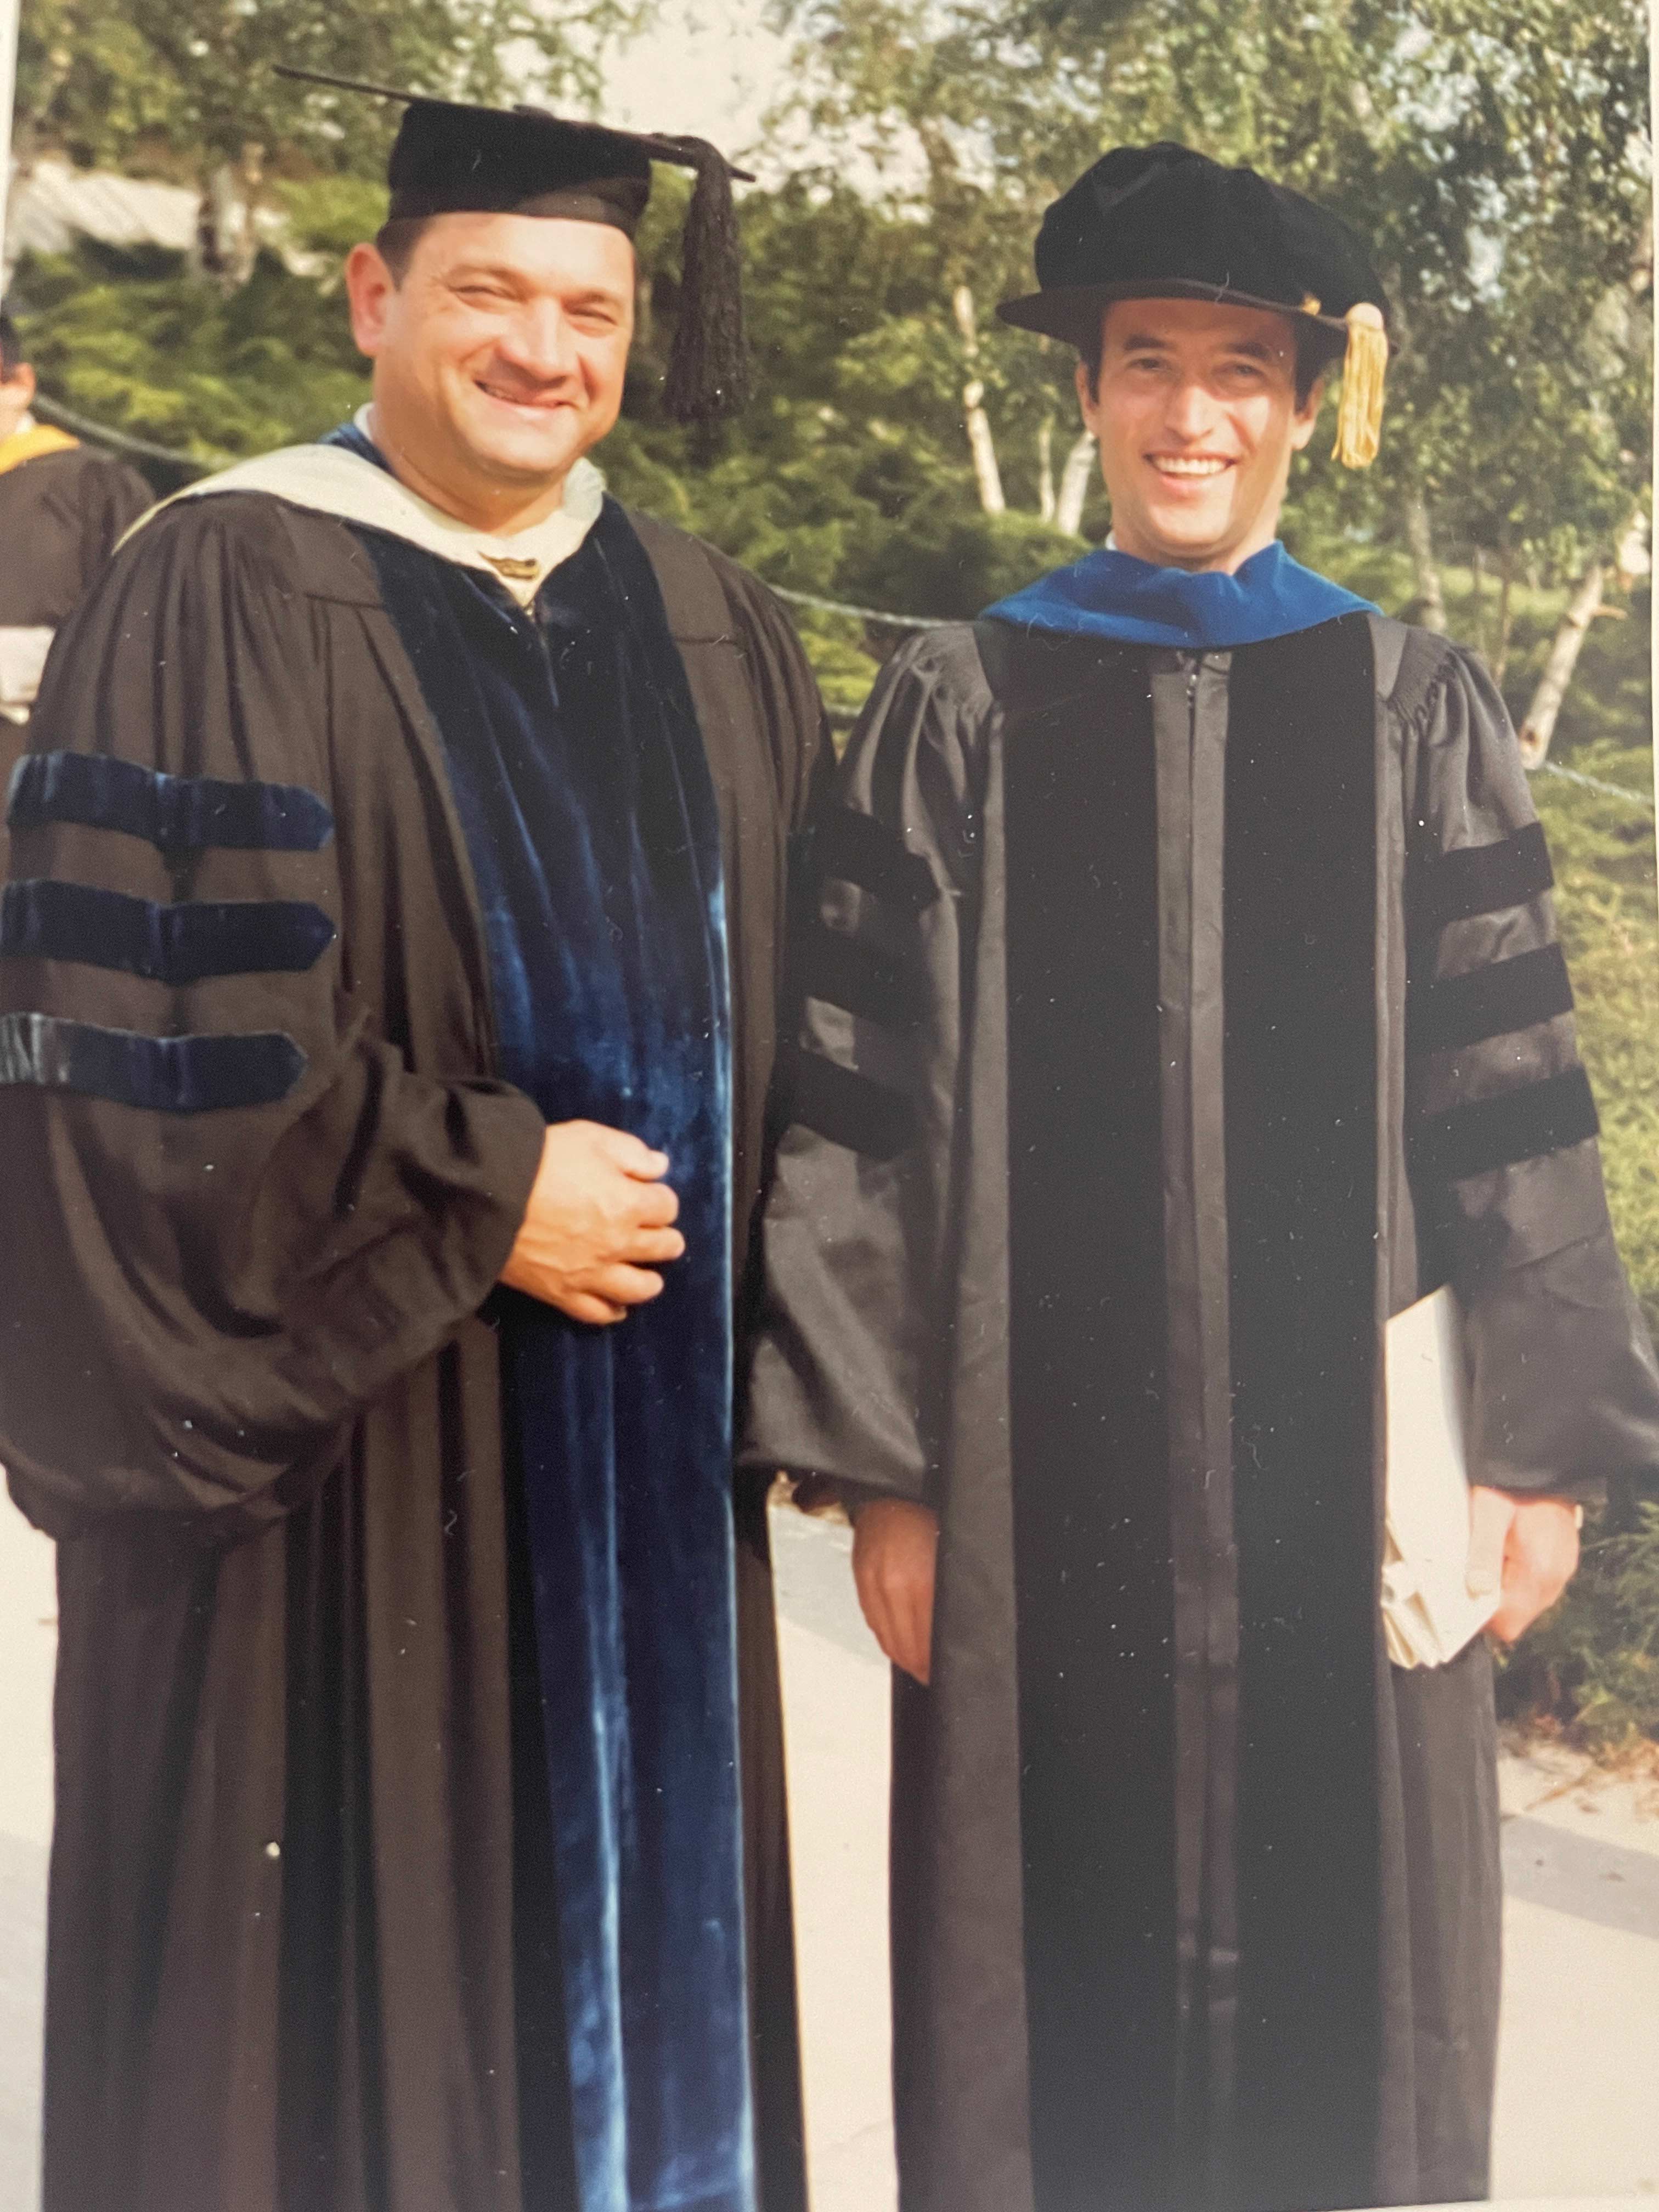 Bahram Zamani (right) with his advisor Bernie E. Knezek at the MSU graduation ceremony on June 12, 1982.